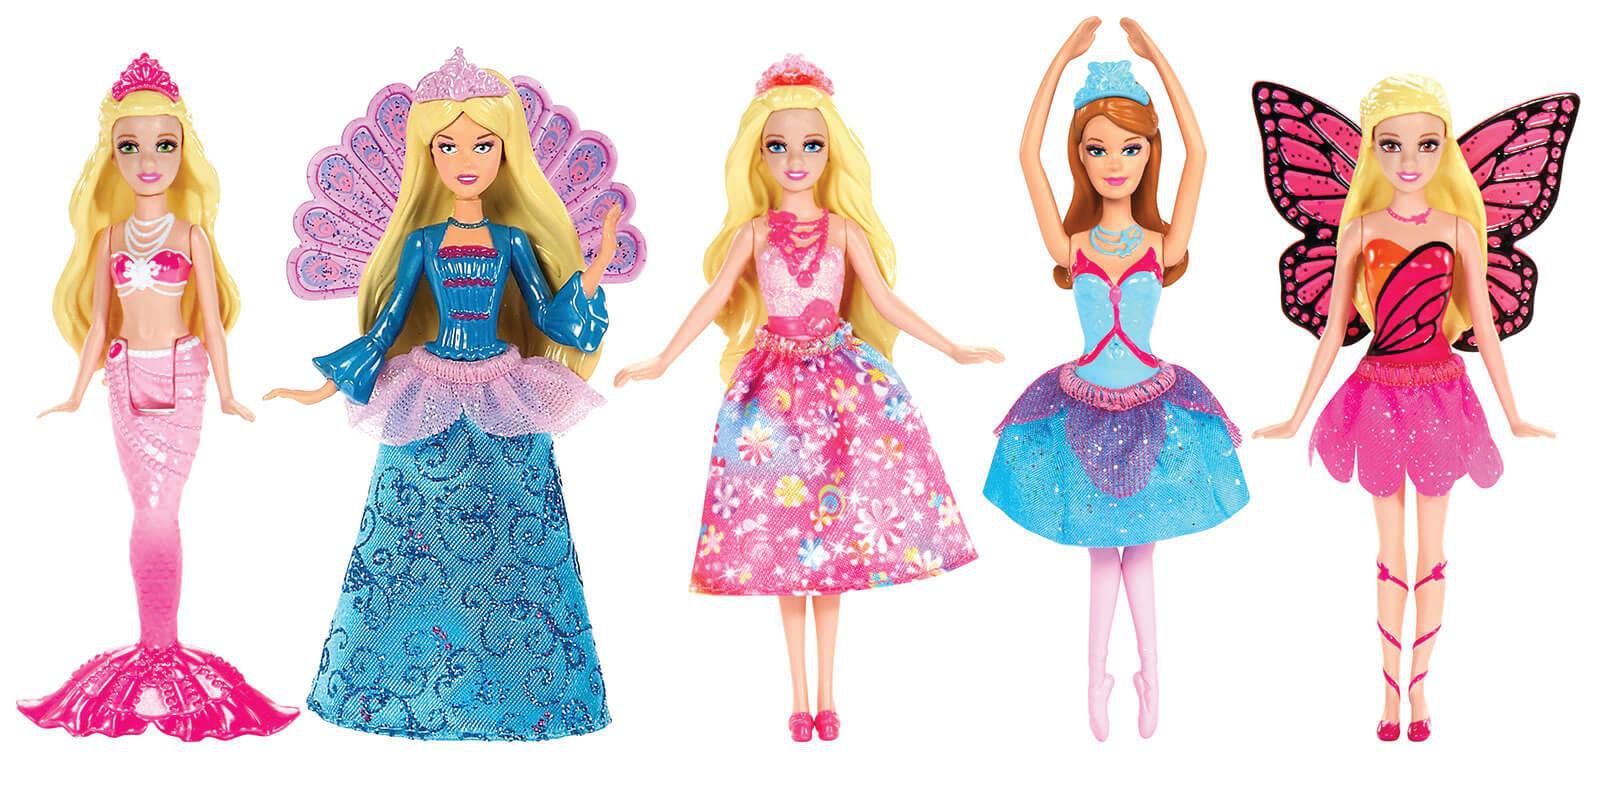 Мини куклы барби. Куклы Барби Минис Маттель. Кукла Mattel Barbie сказочные мини-куклы. Мини игрушки для Барби. Маленькие фигурки Барби.